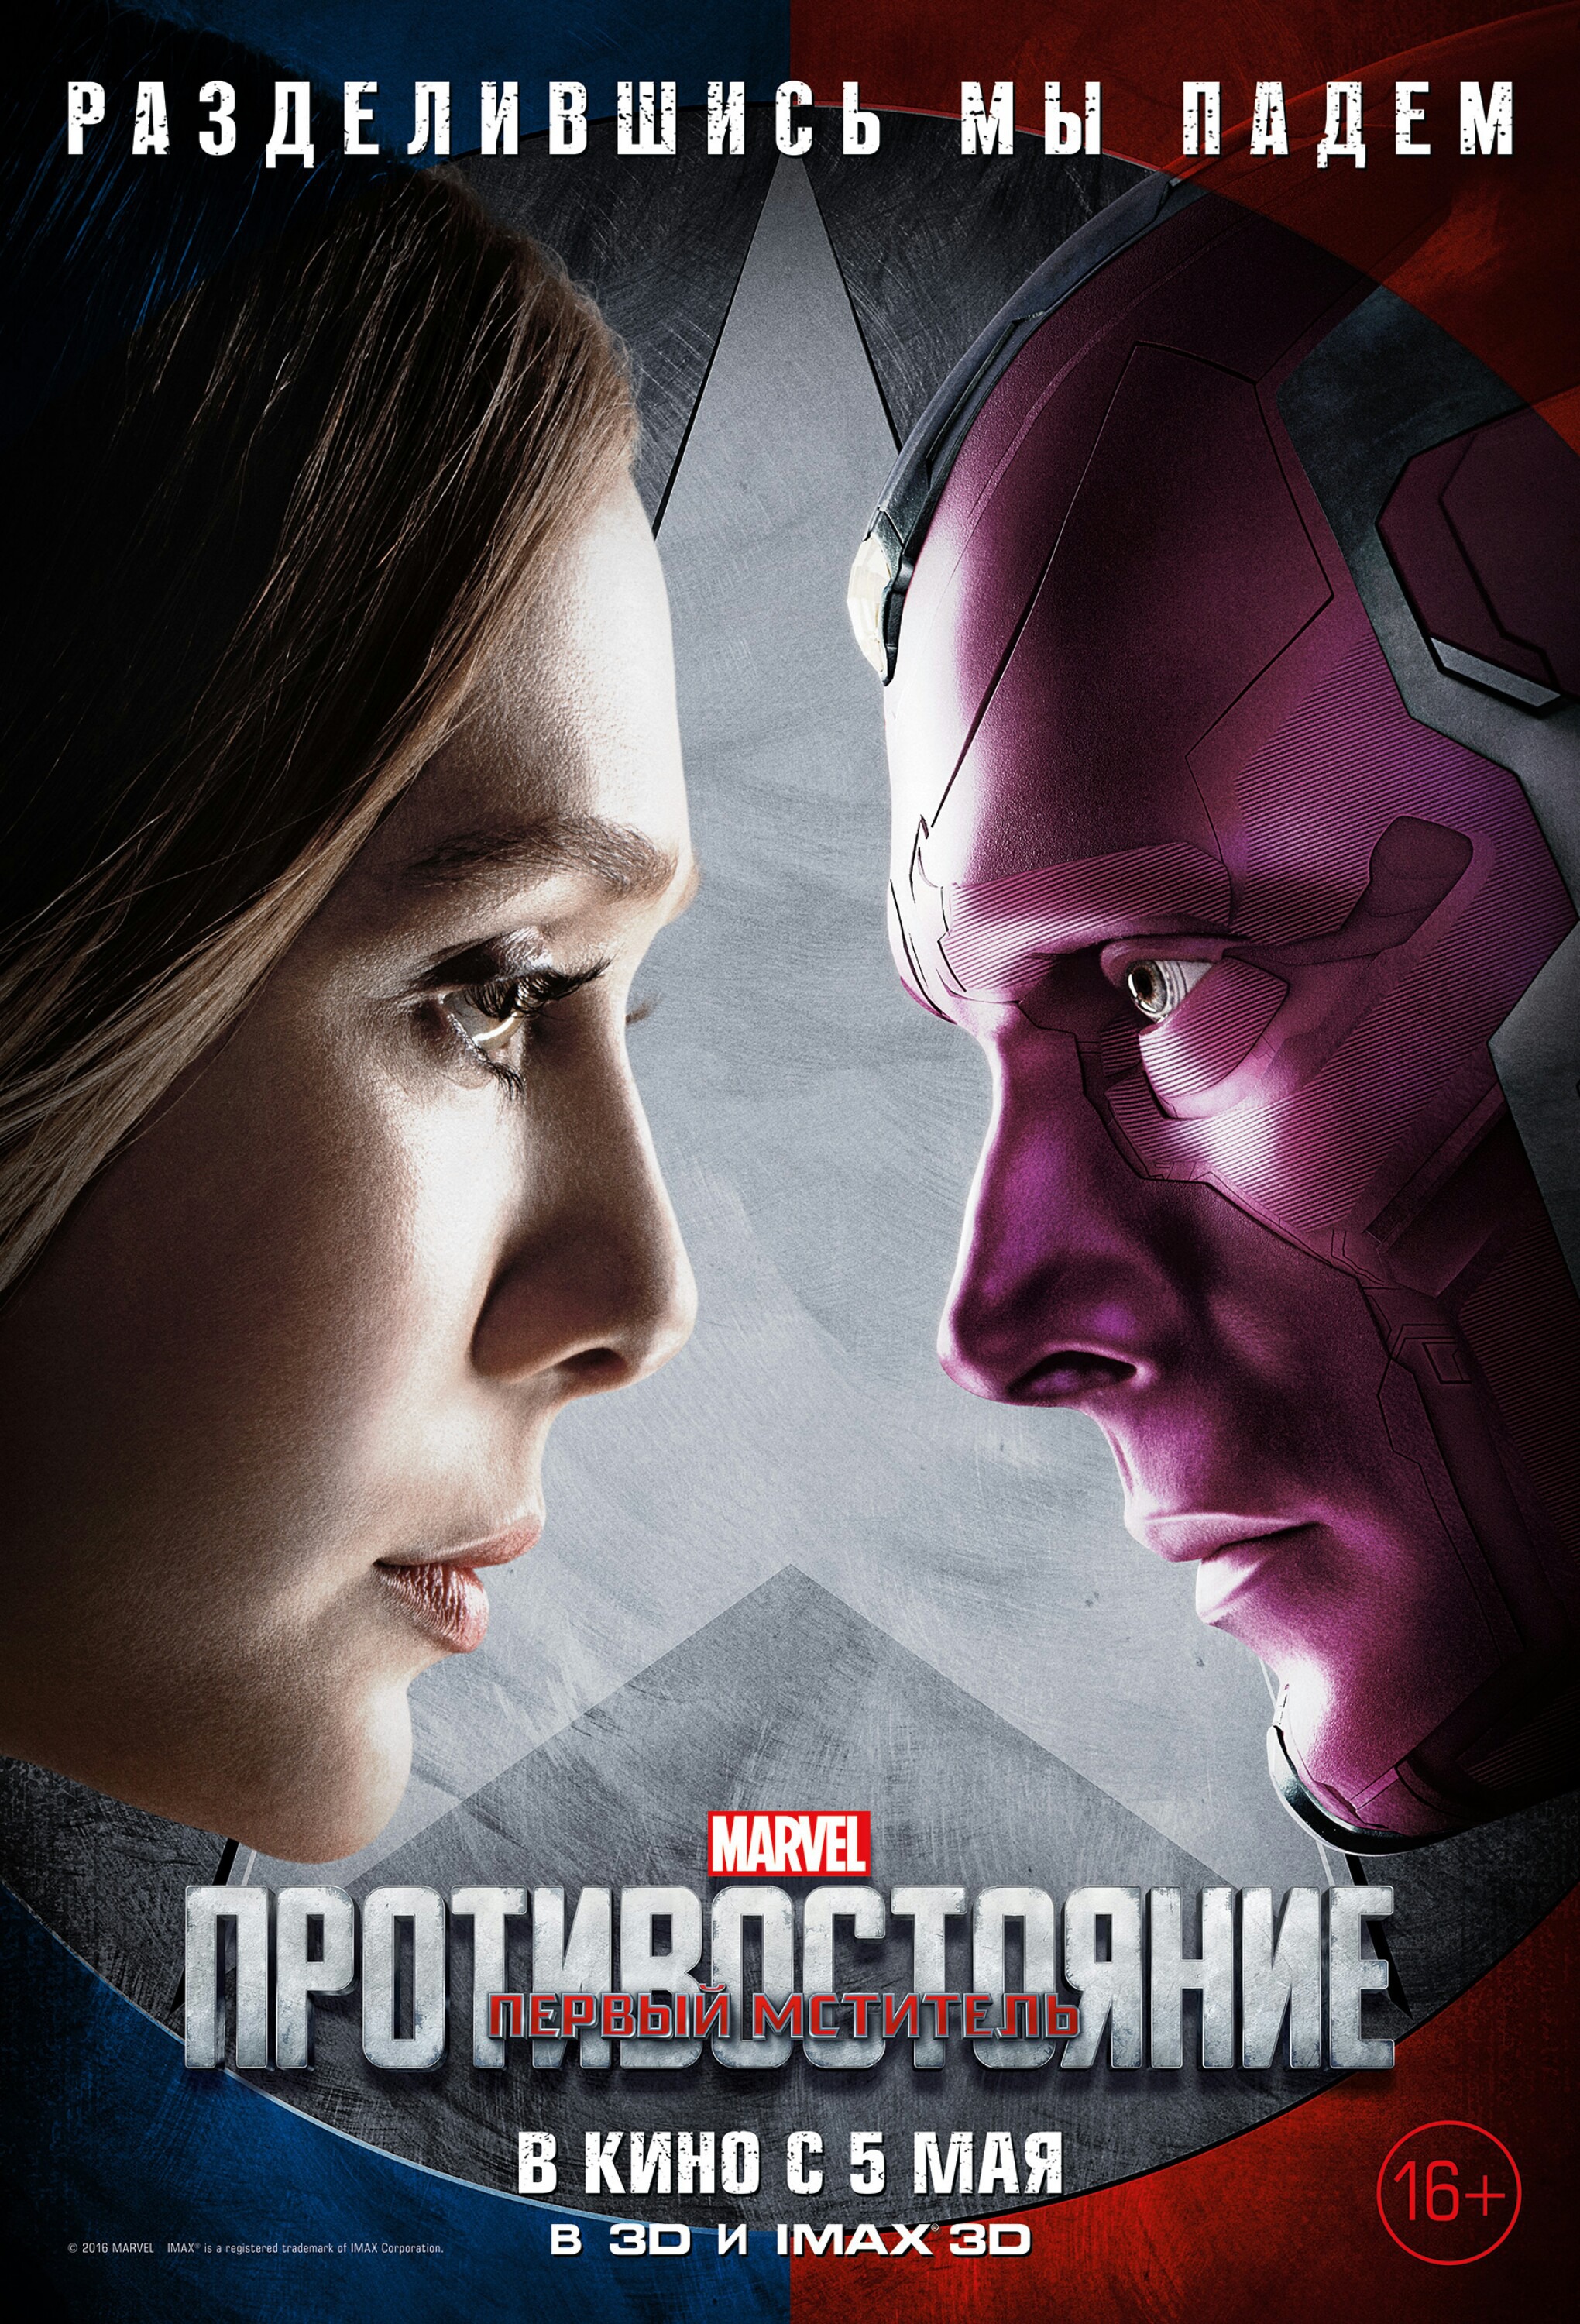 Mega Sized Movie Poster Image for Captain America: Civil War (#28 of 42)